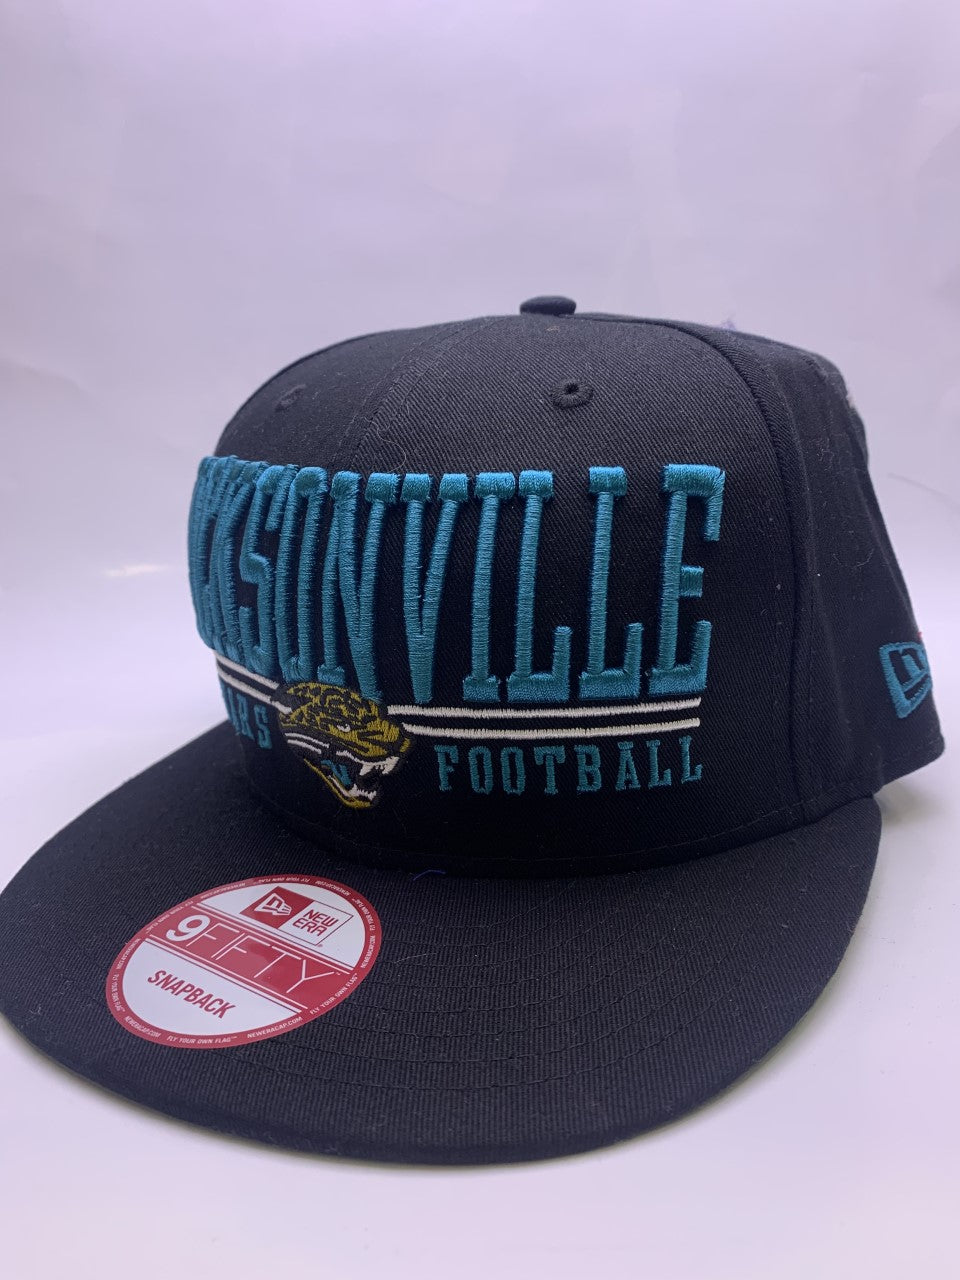 Jacksonville Jaguars Football New Era 9FIFTY Snapback Hat